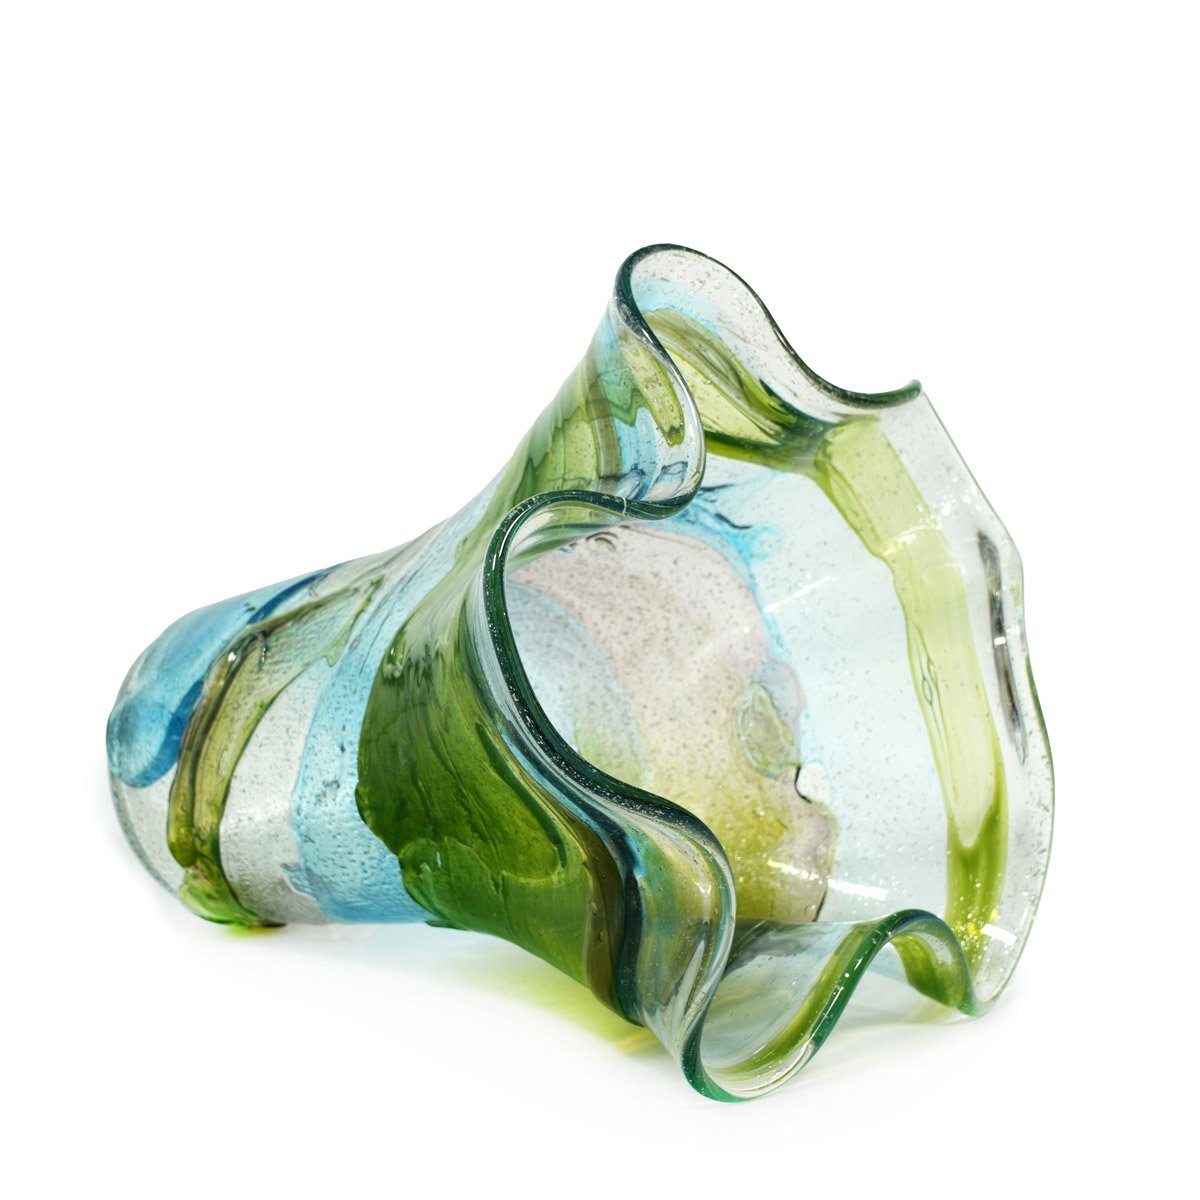 Vases Blown Collection: Lagoon Sbruffi Centerpiece Vase - Murano glass